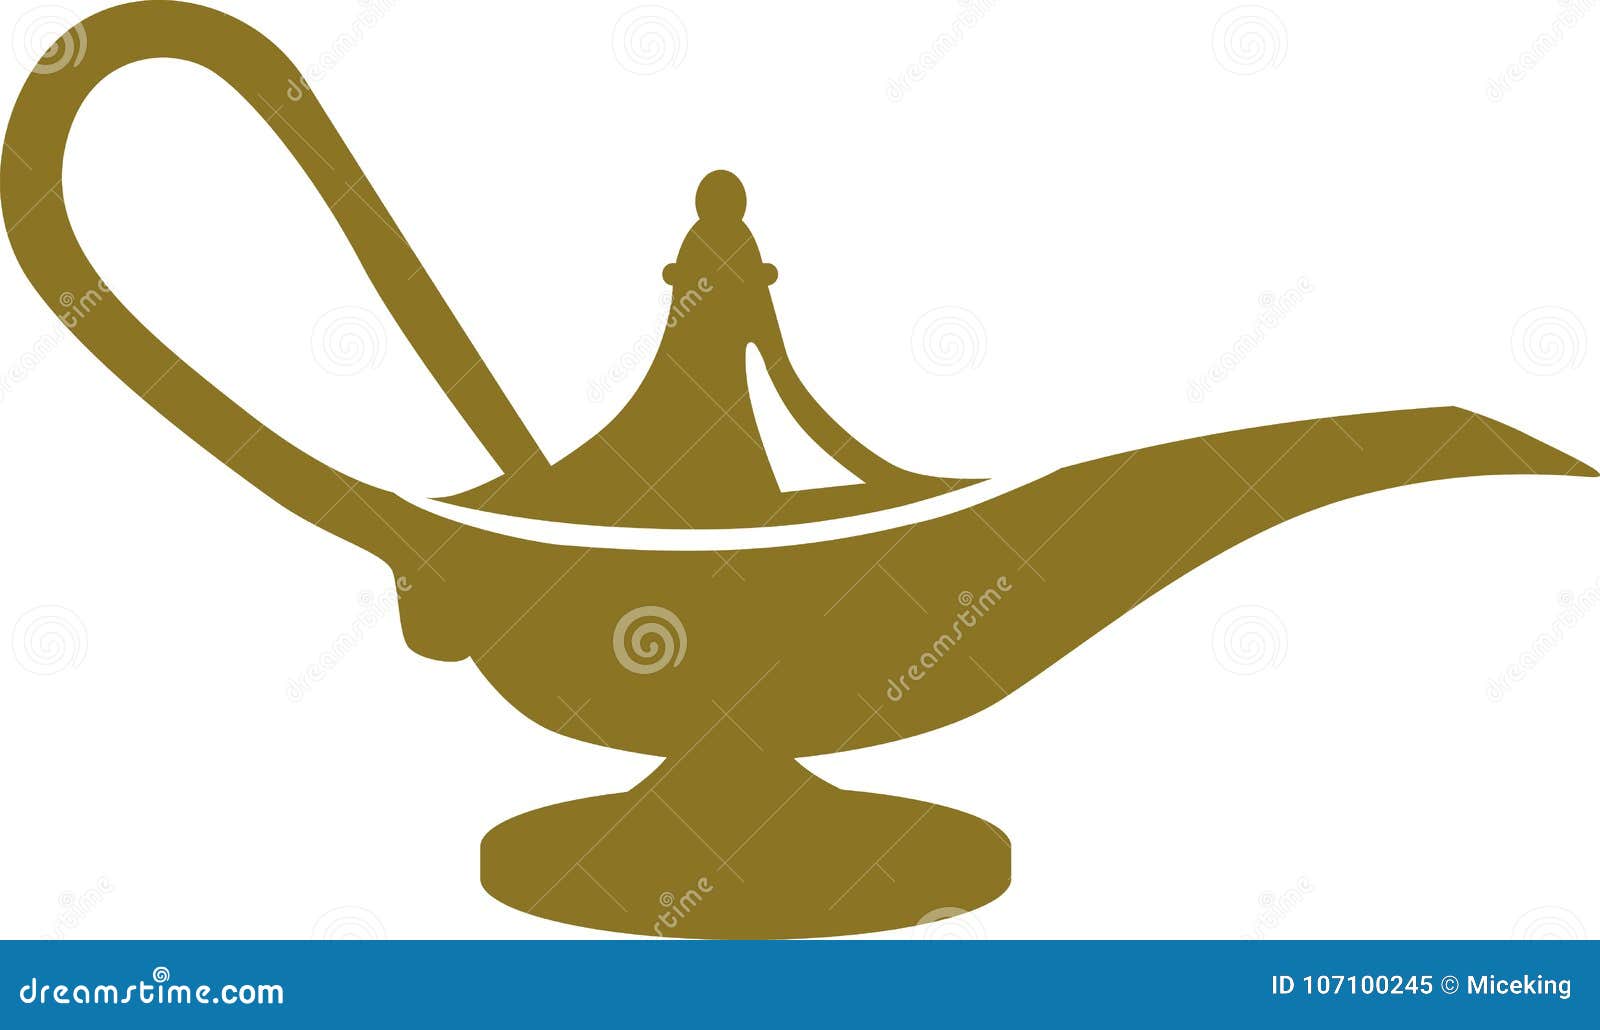 Golden magic lamp stock vector. Illustration of sign - 107100245